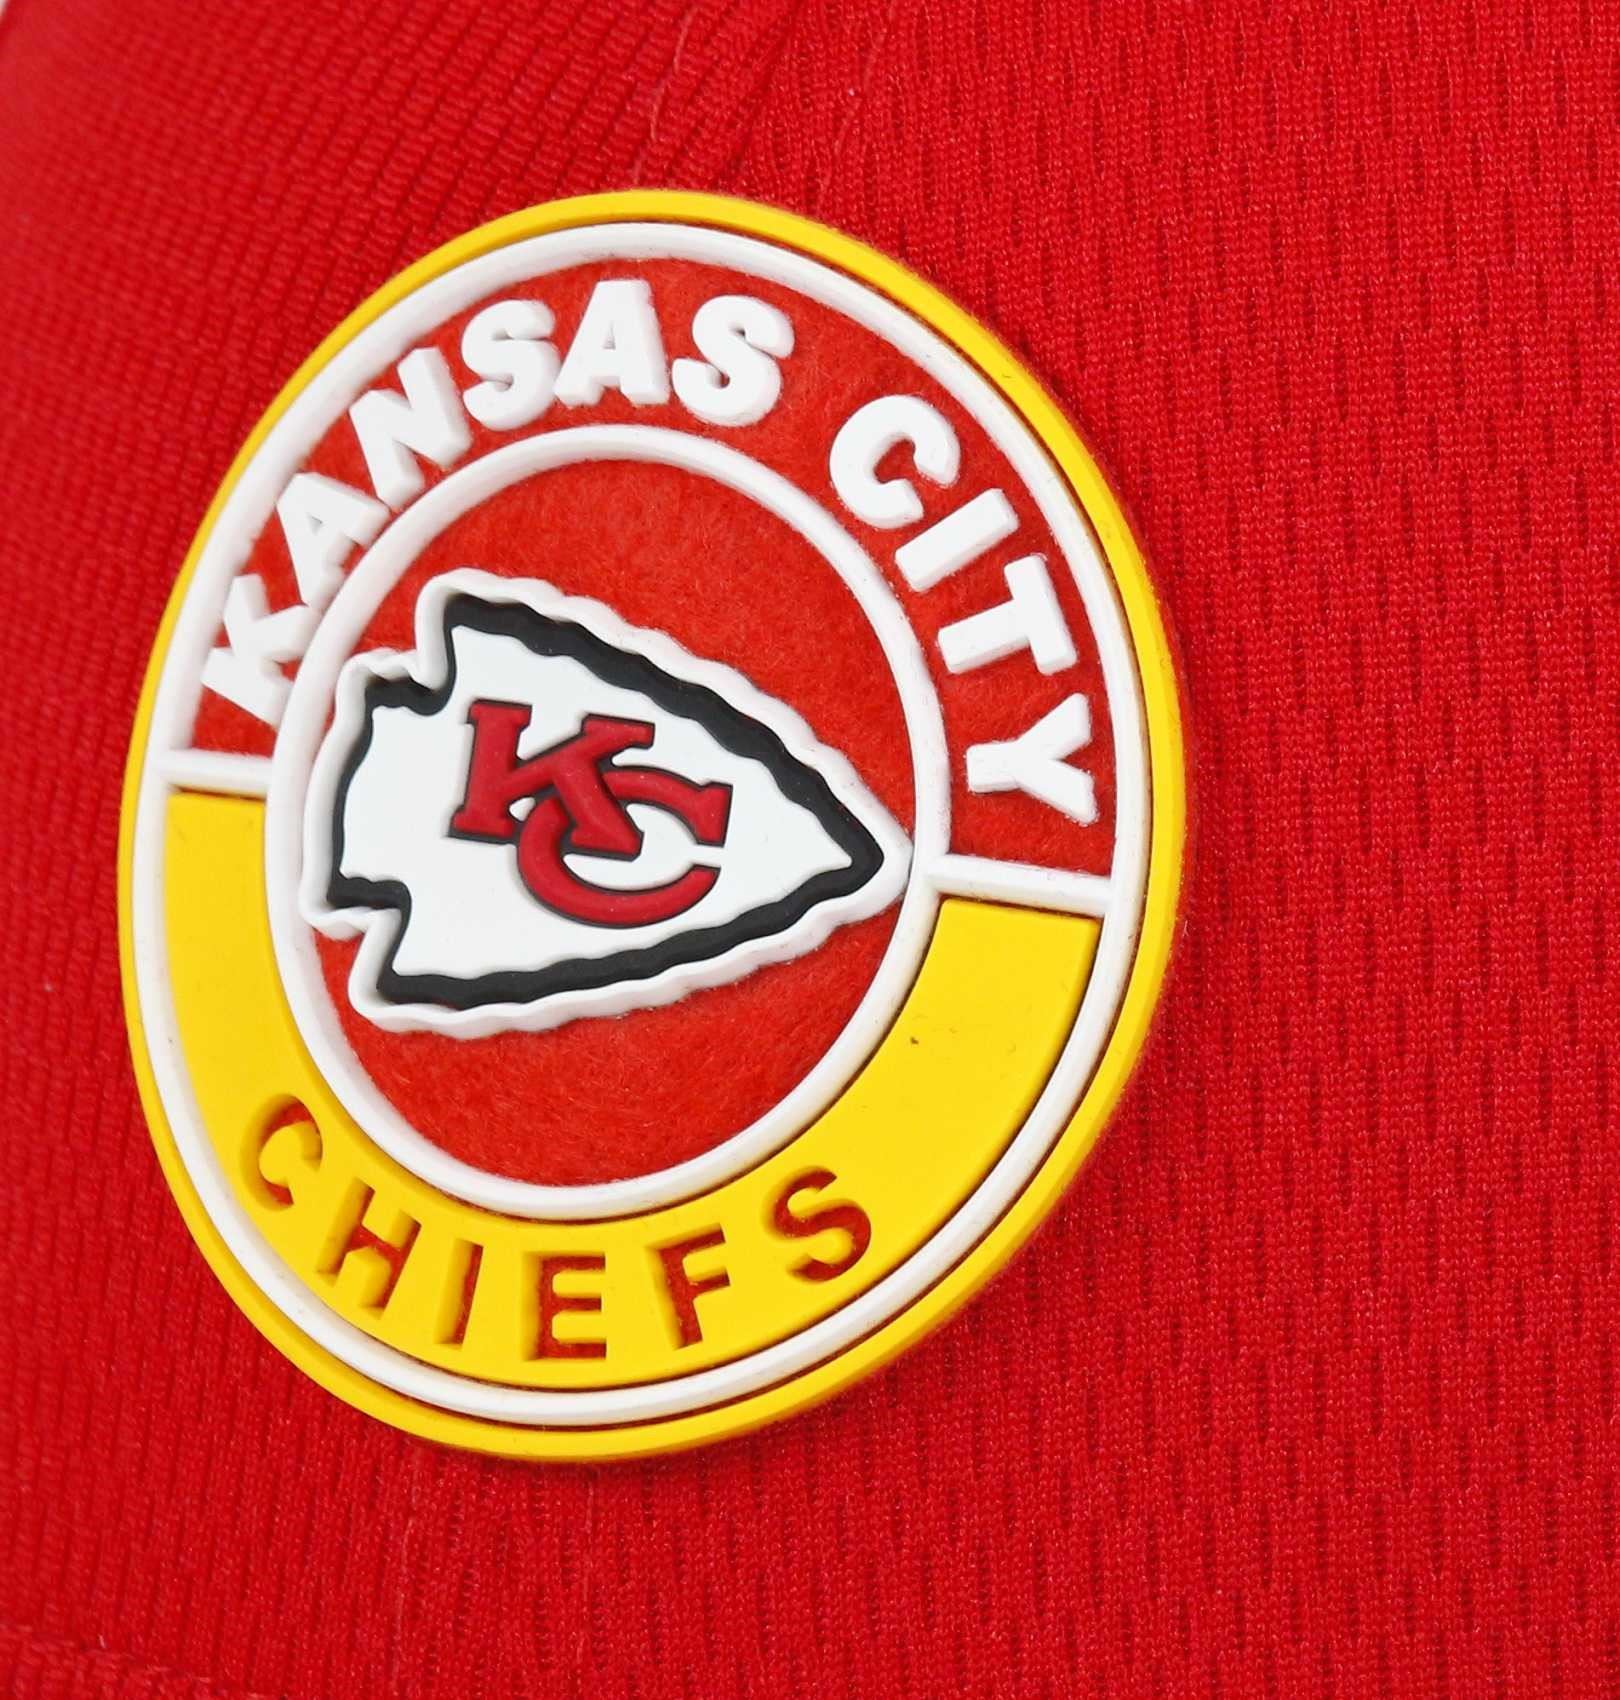 Kansas City Chiefs NFL 2020 Sideline Road Alternative 39Thirty Stretch Cap New Era